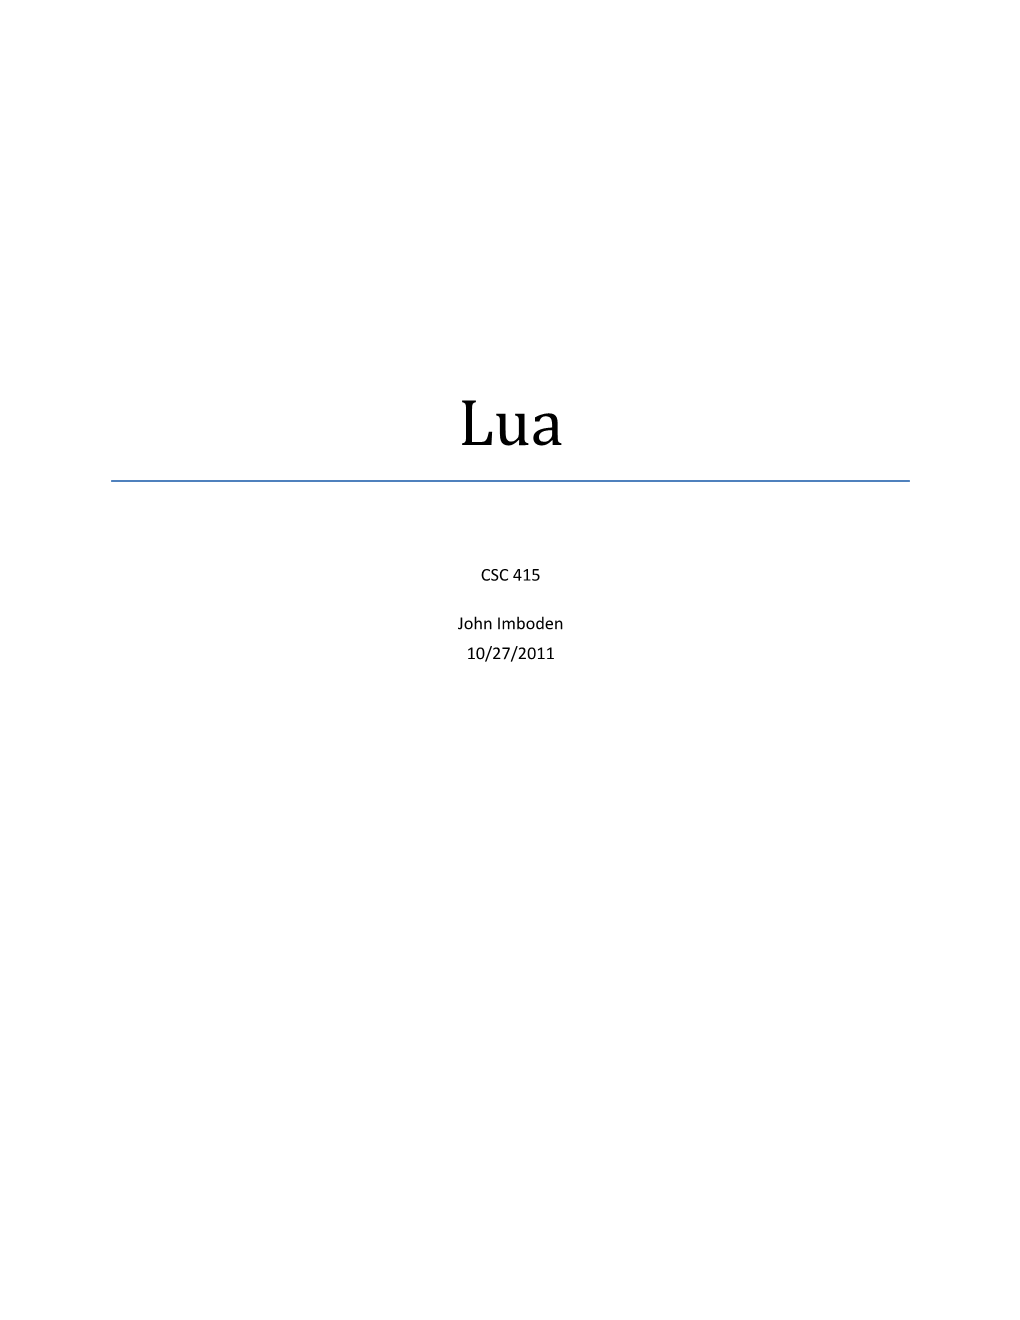 A Short History of Lua